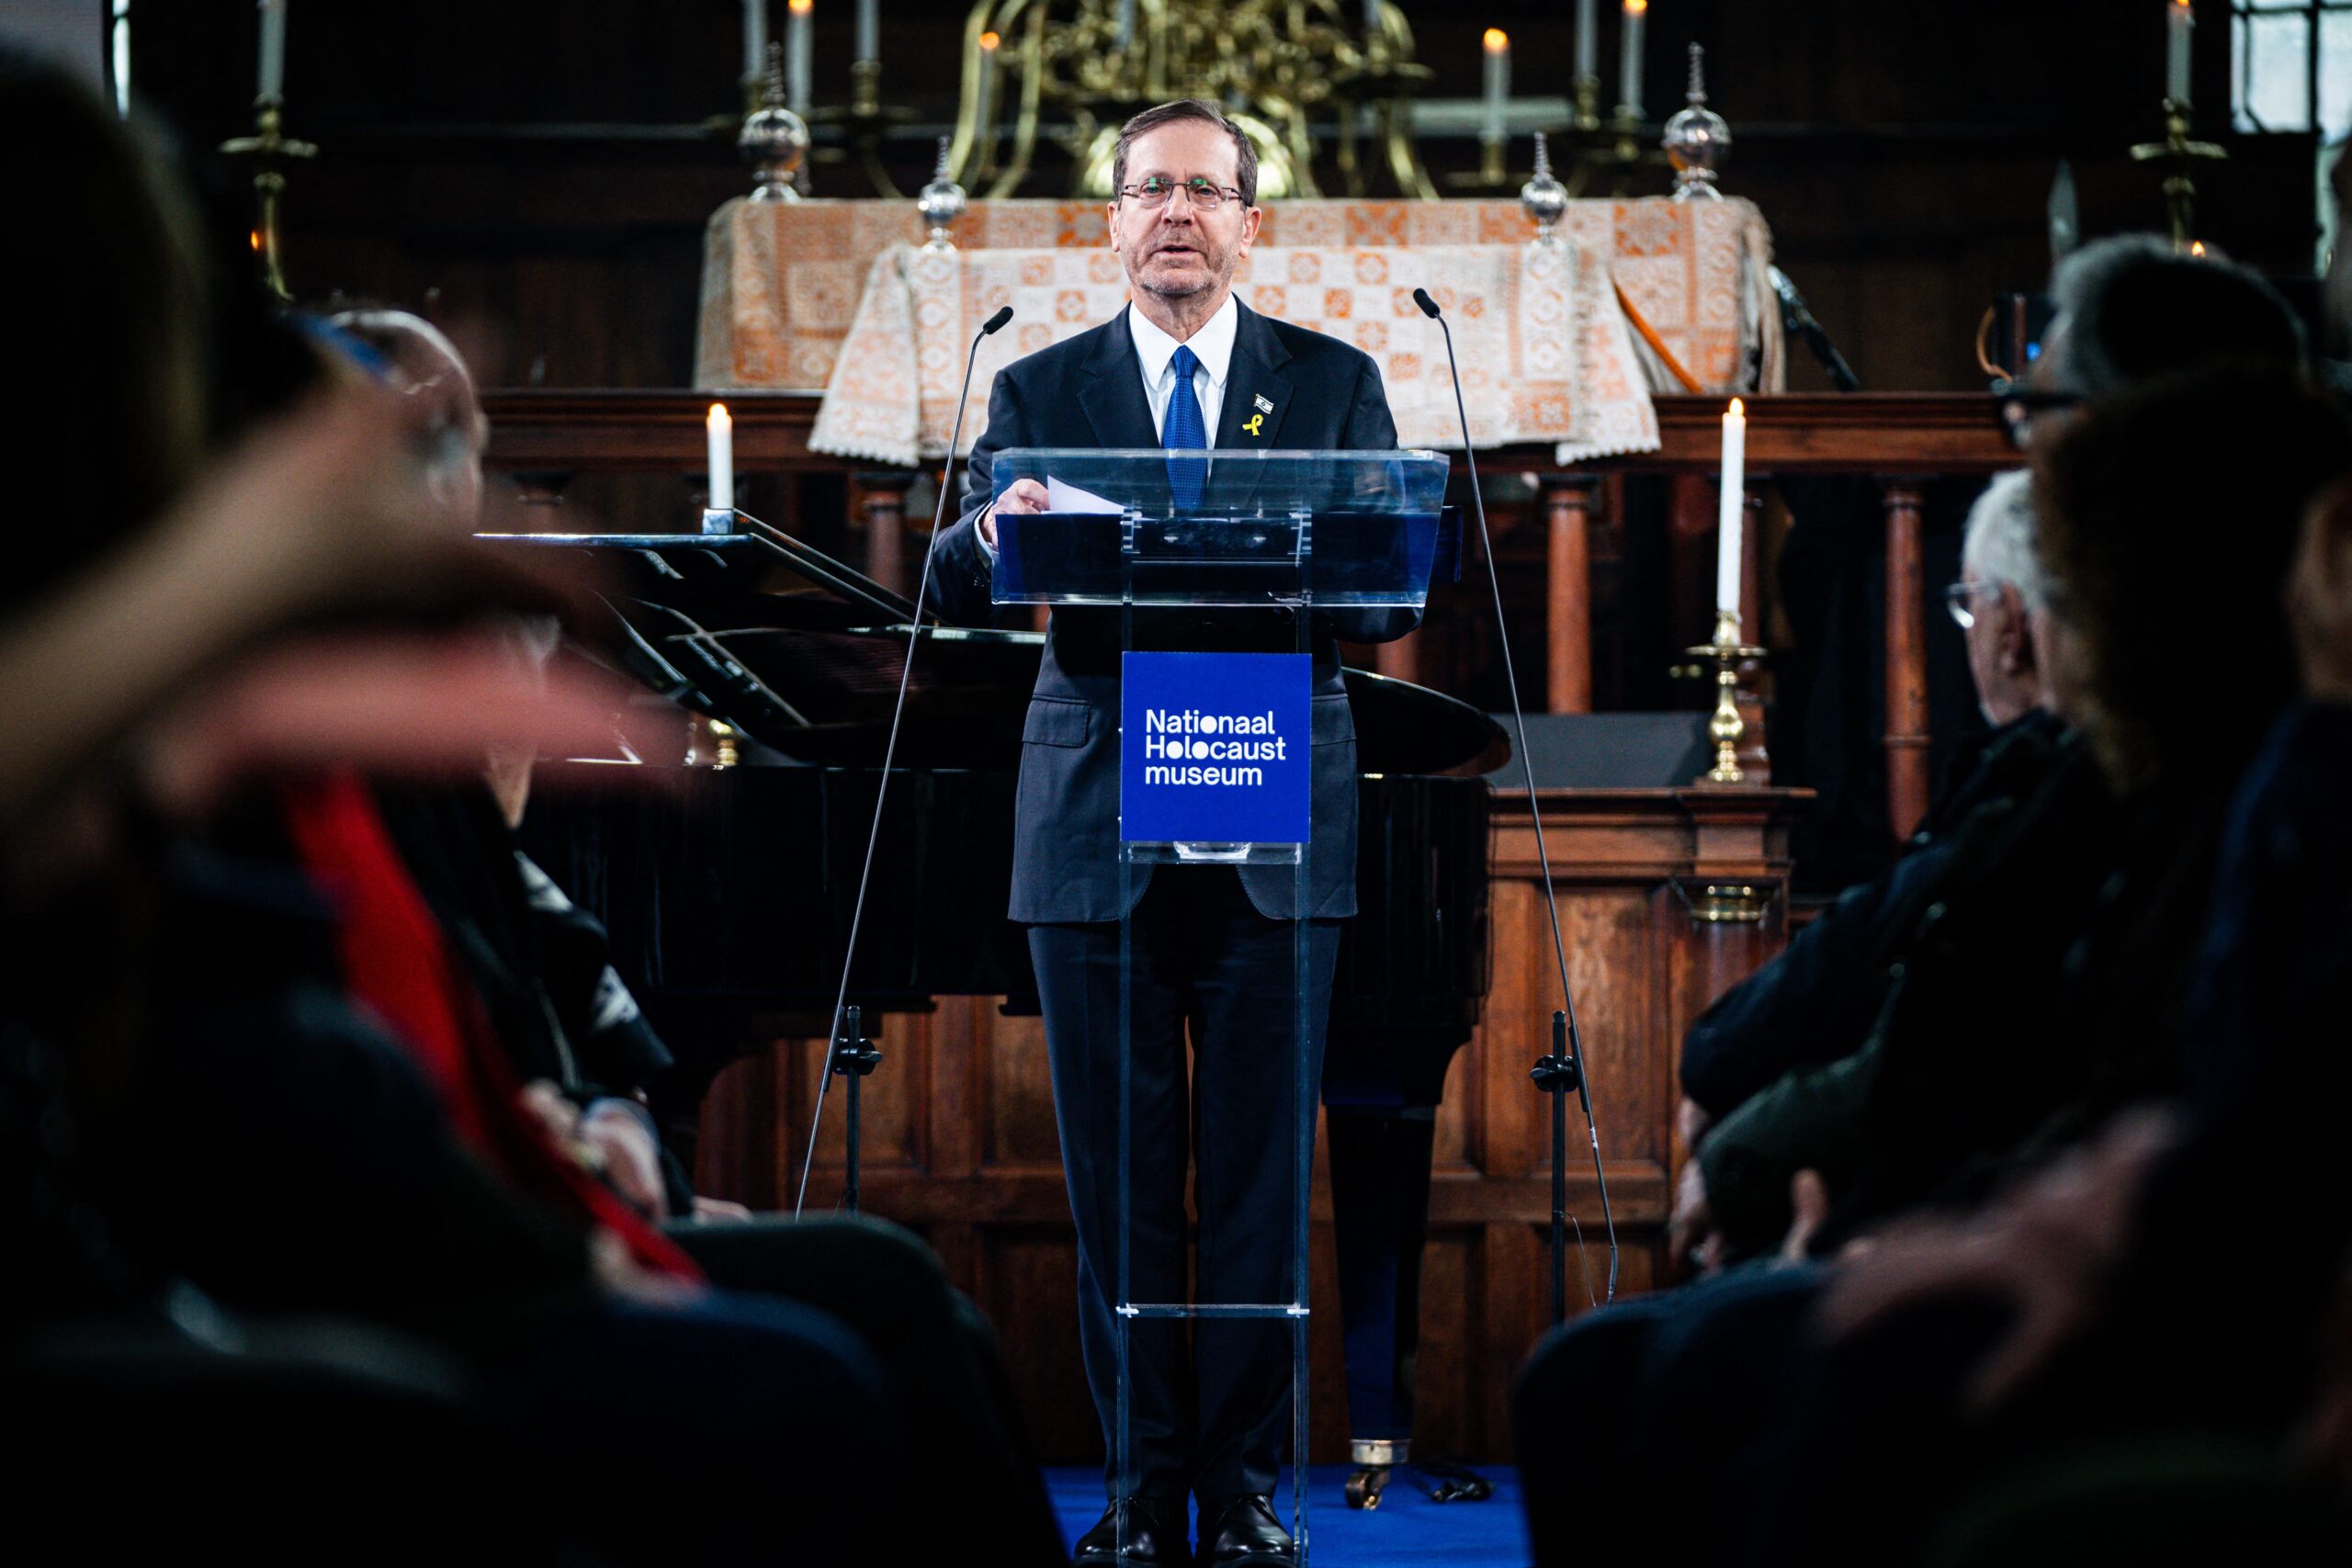 Israeli President Herzog opens Holocaust museum in Amsterdam amid protest - International News - News